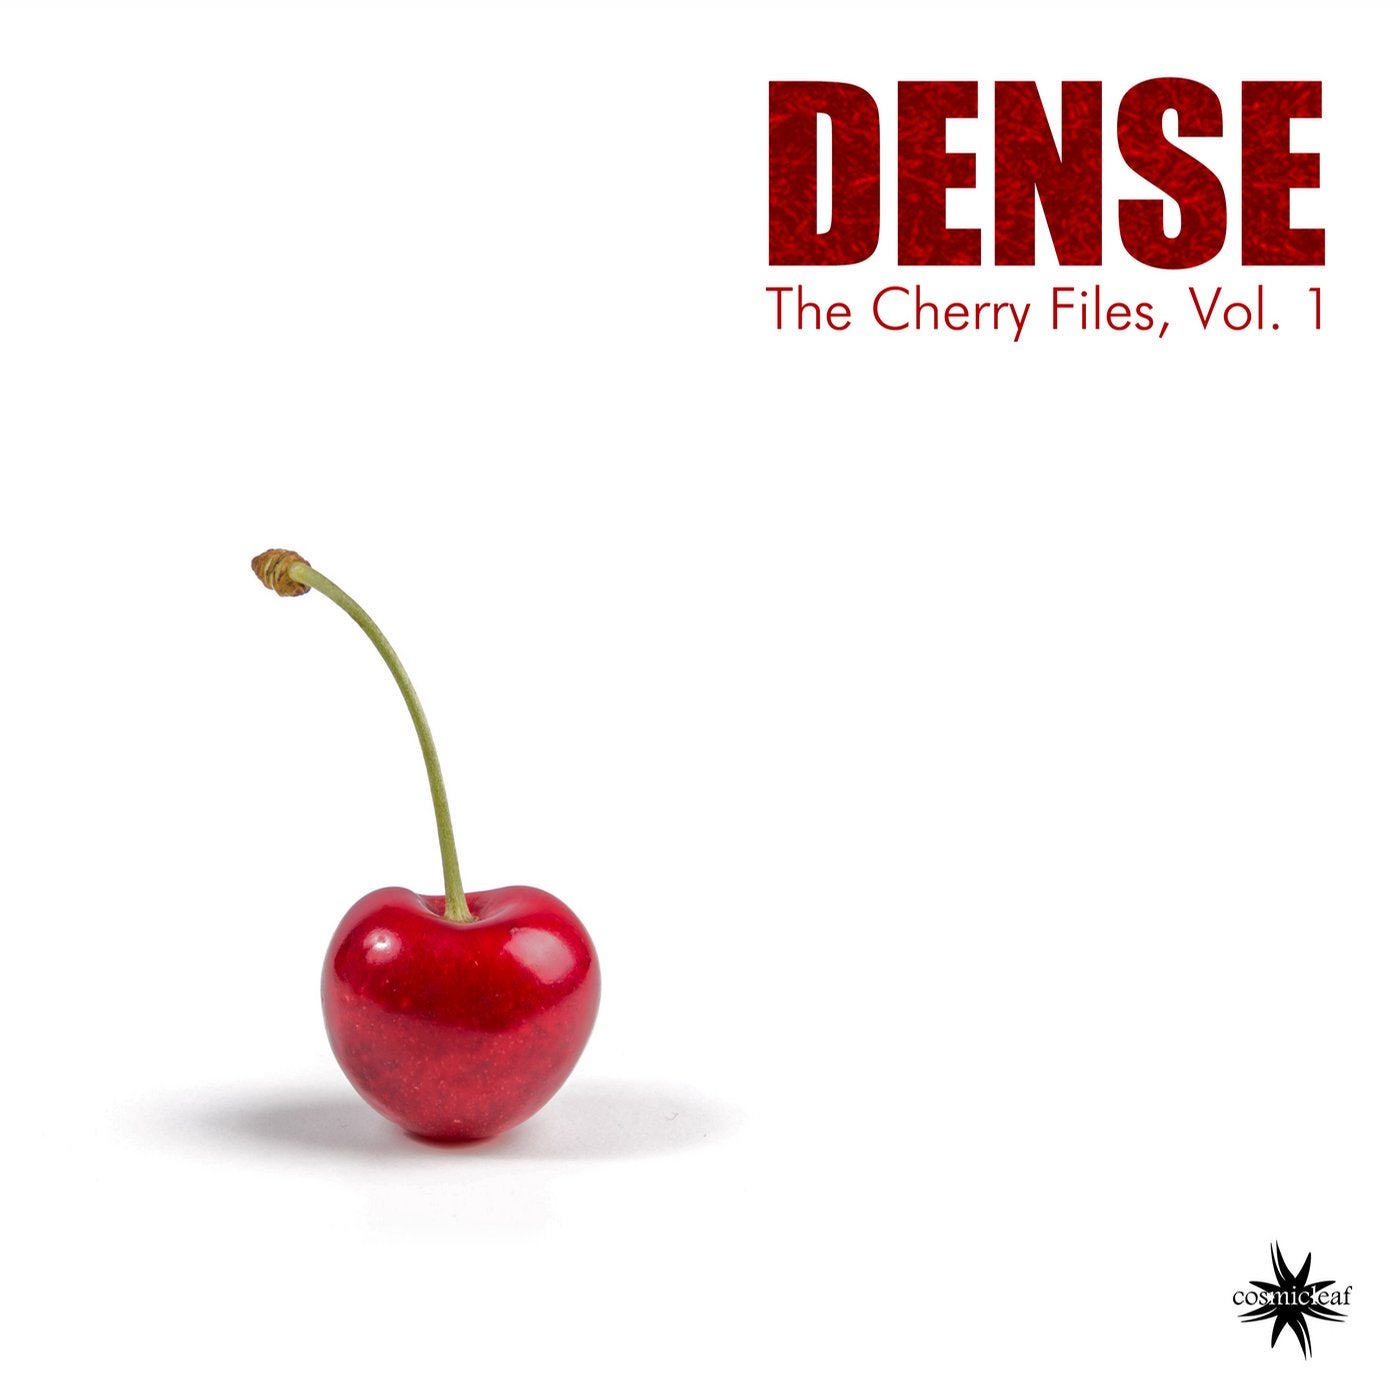 The Cherry Files, Vol. 1